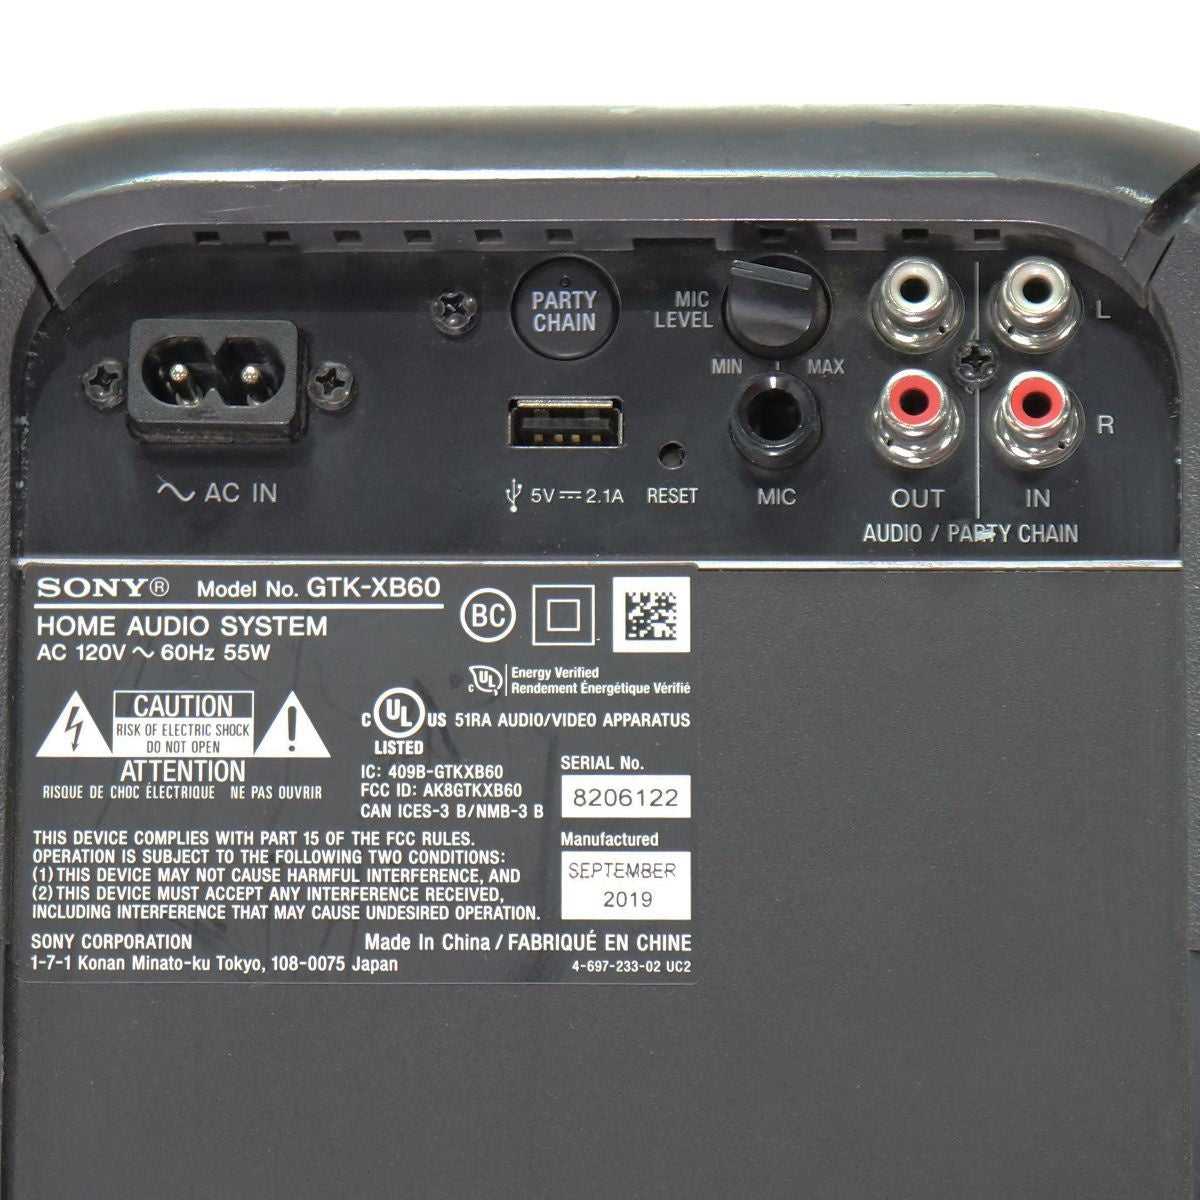 Sony - High Power XB60 Portable Bluetooth Speaker - Black